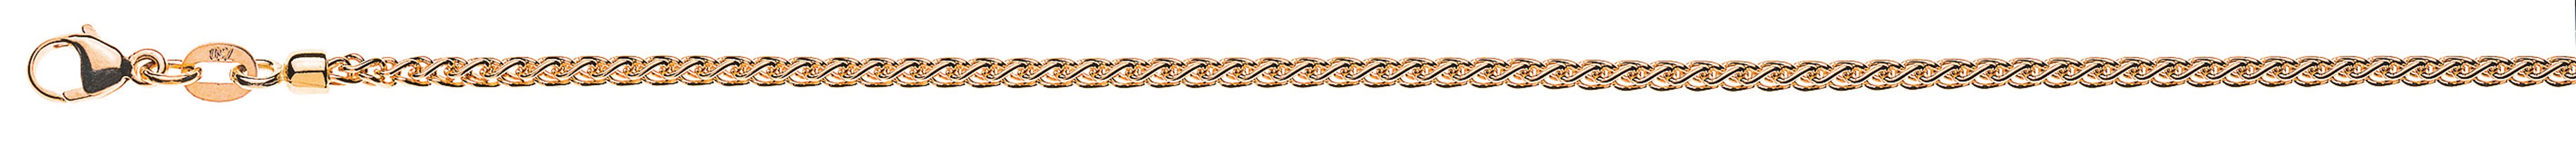 AURONOS Prestige Halskette Roségold 18K Zopfkette 40cm 2.15mm